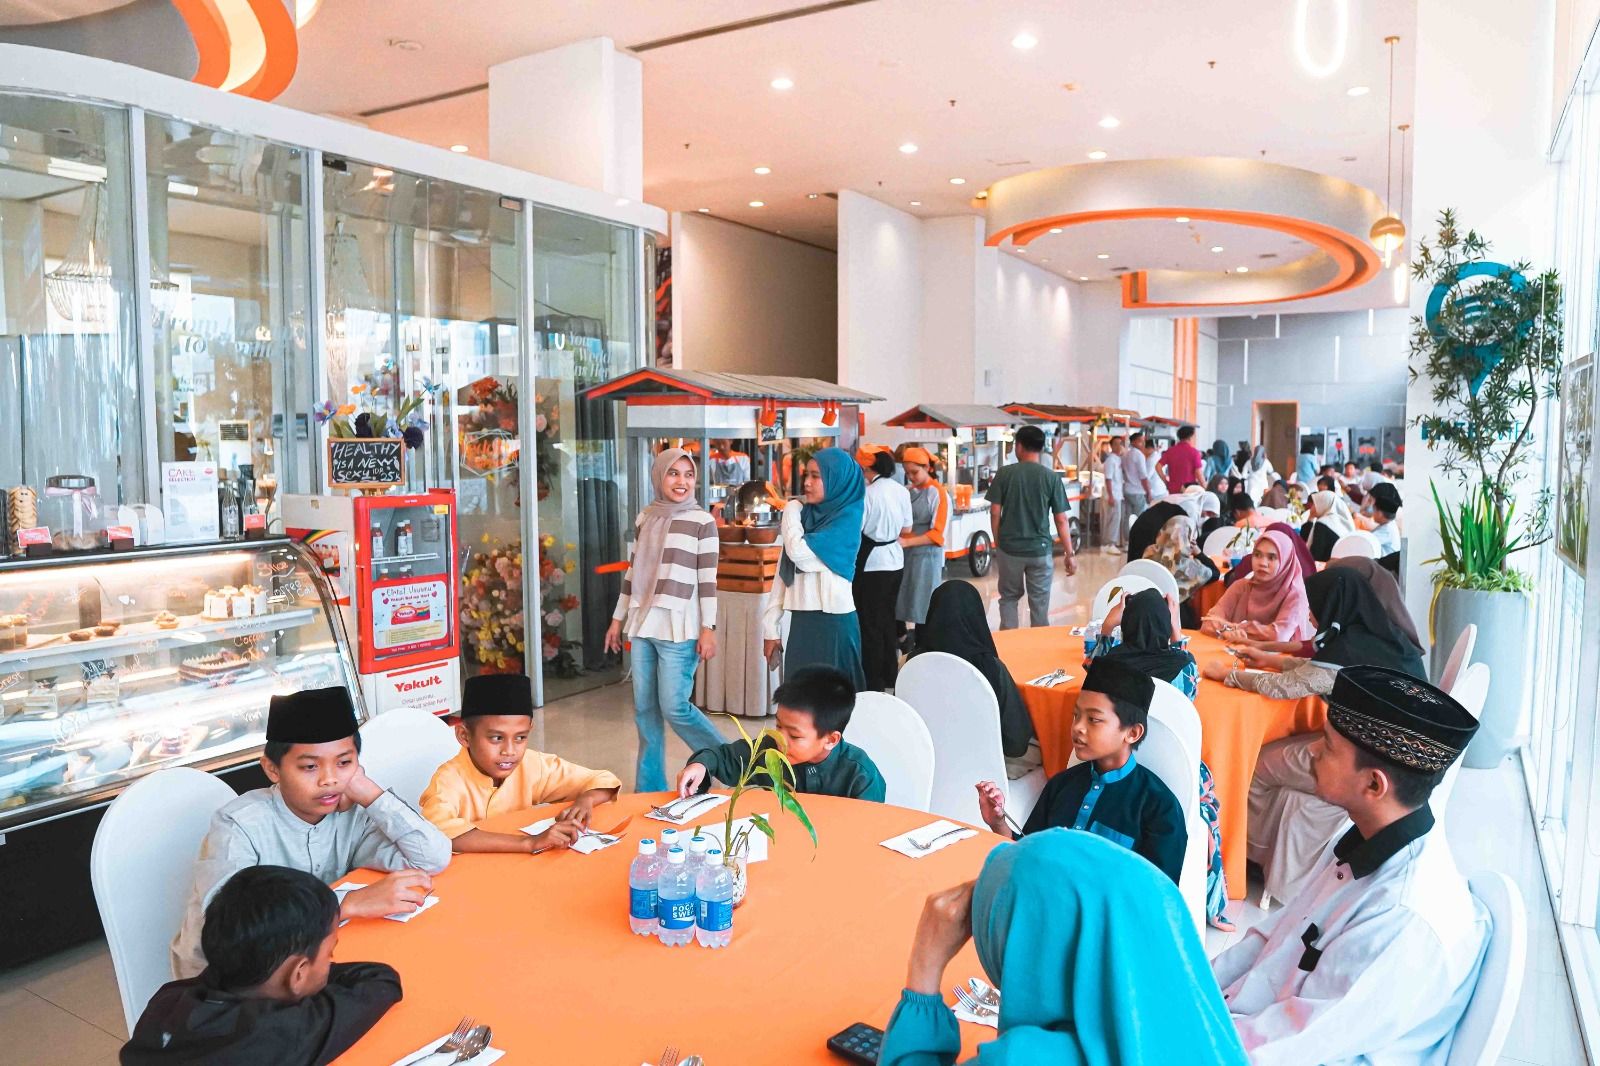 Kebersamaan Ramadan di HARRIS Hotel Batam Center, Promo Beli 5 Gratis 1 dan Hampers Spesial Lebaran Menyambut Puncak Ramadan.